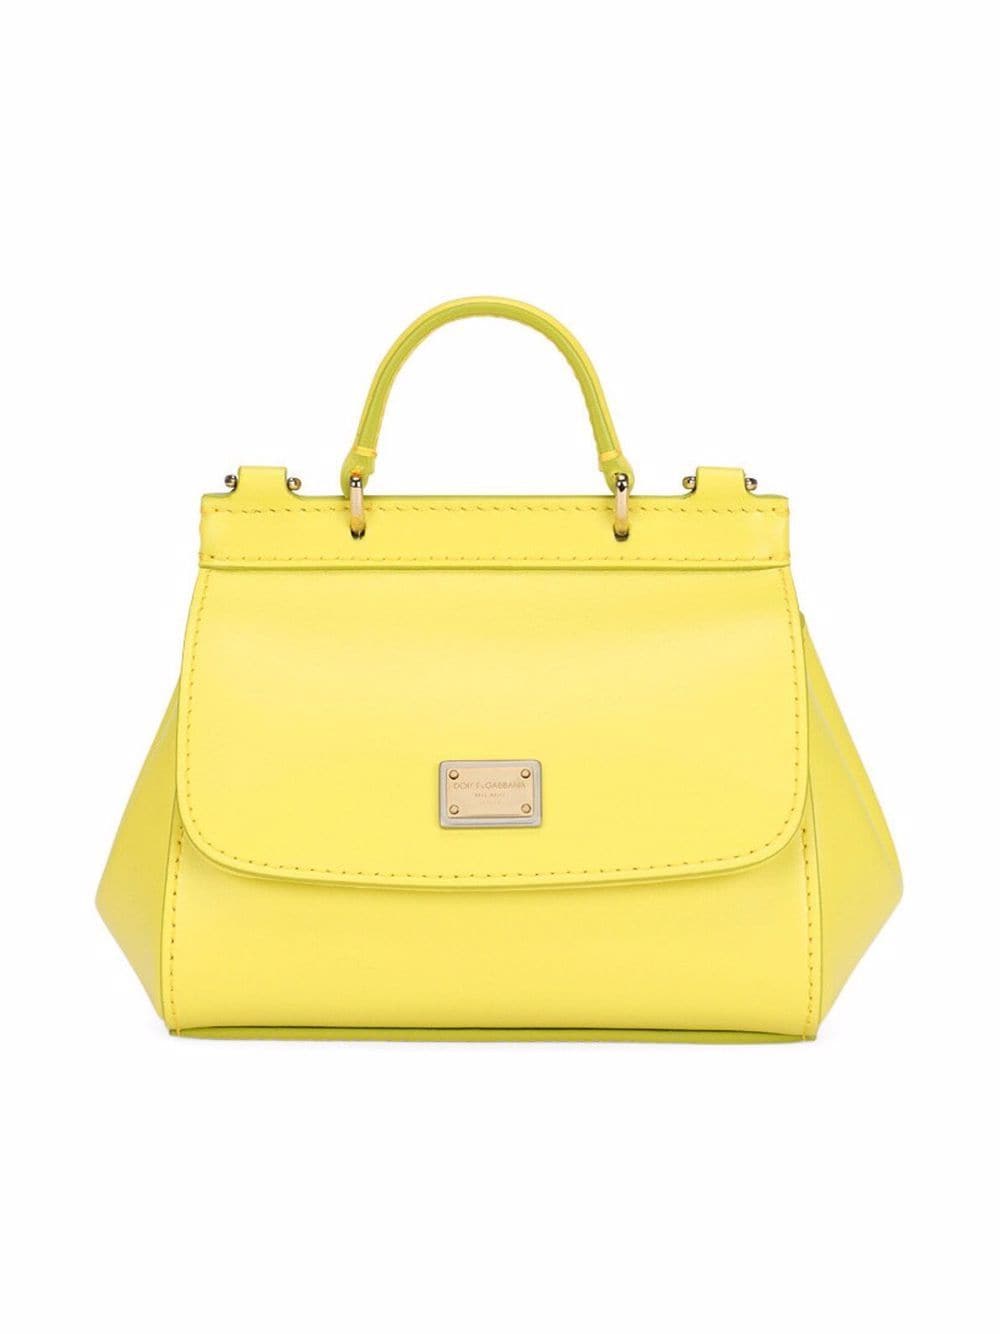 DOLCE & GABBANA KIDS Sicily Leather Shoulder Bag Yellow - MAISONDEFASHION.COM